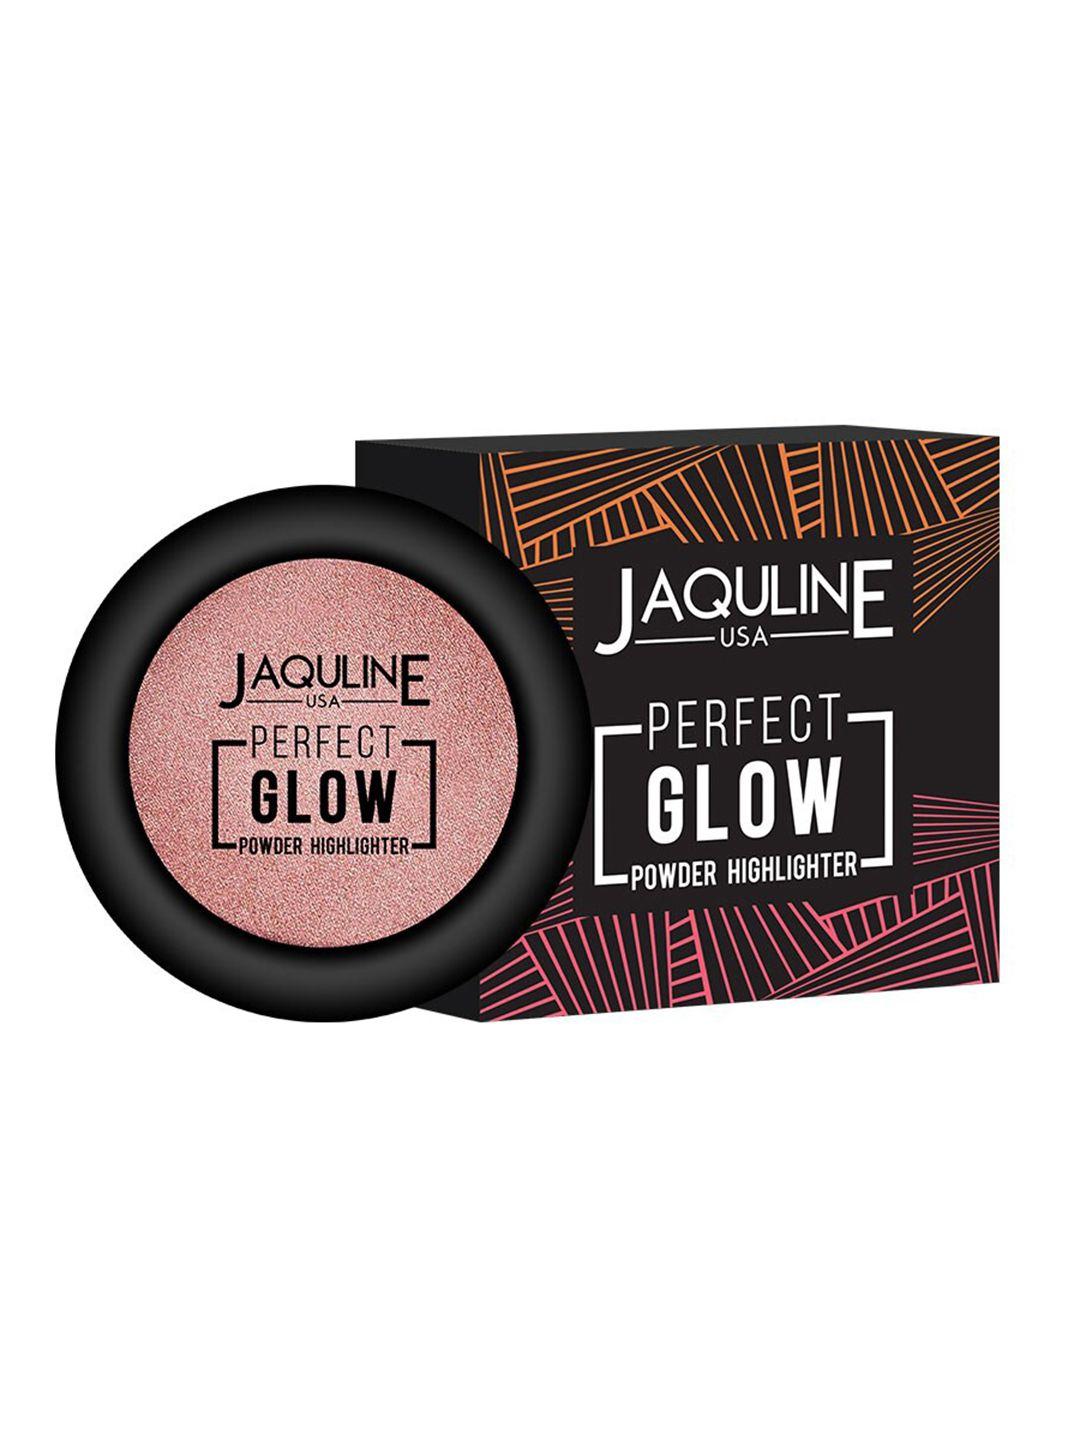 jaquline usa perfect glow blush 5gm - coral sugar 04